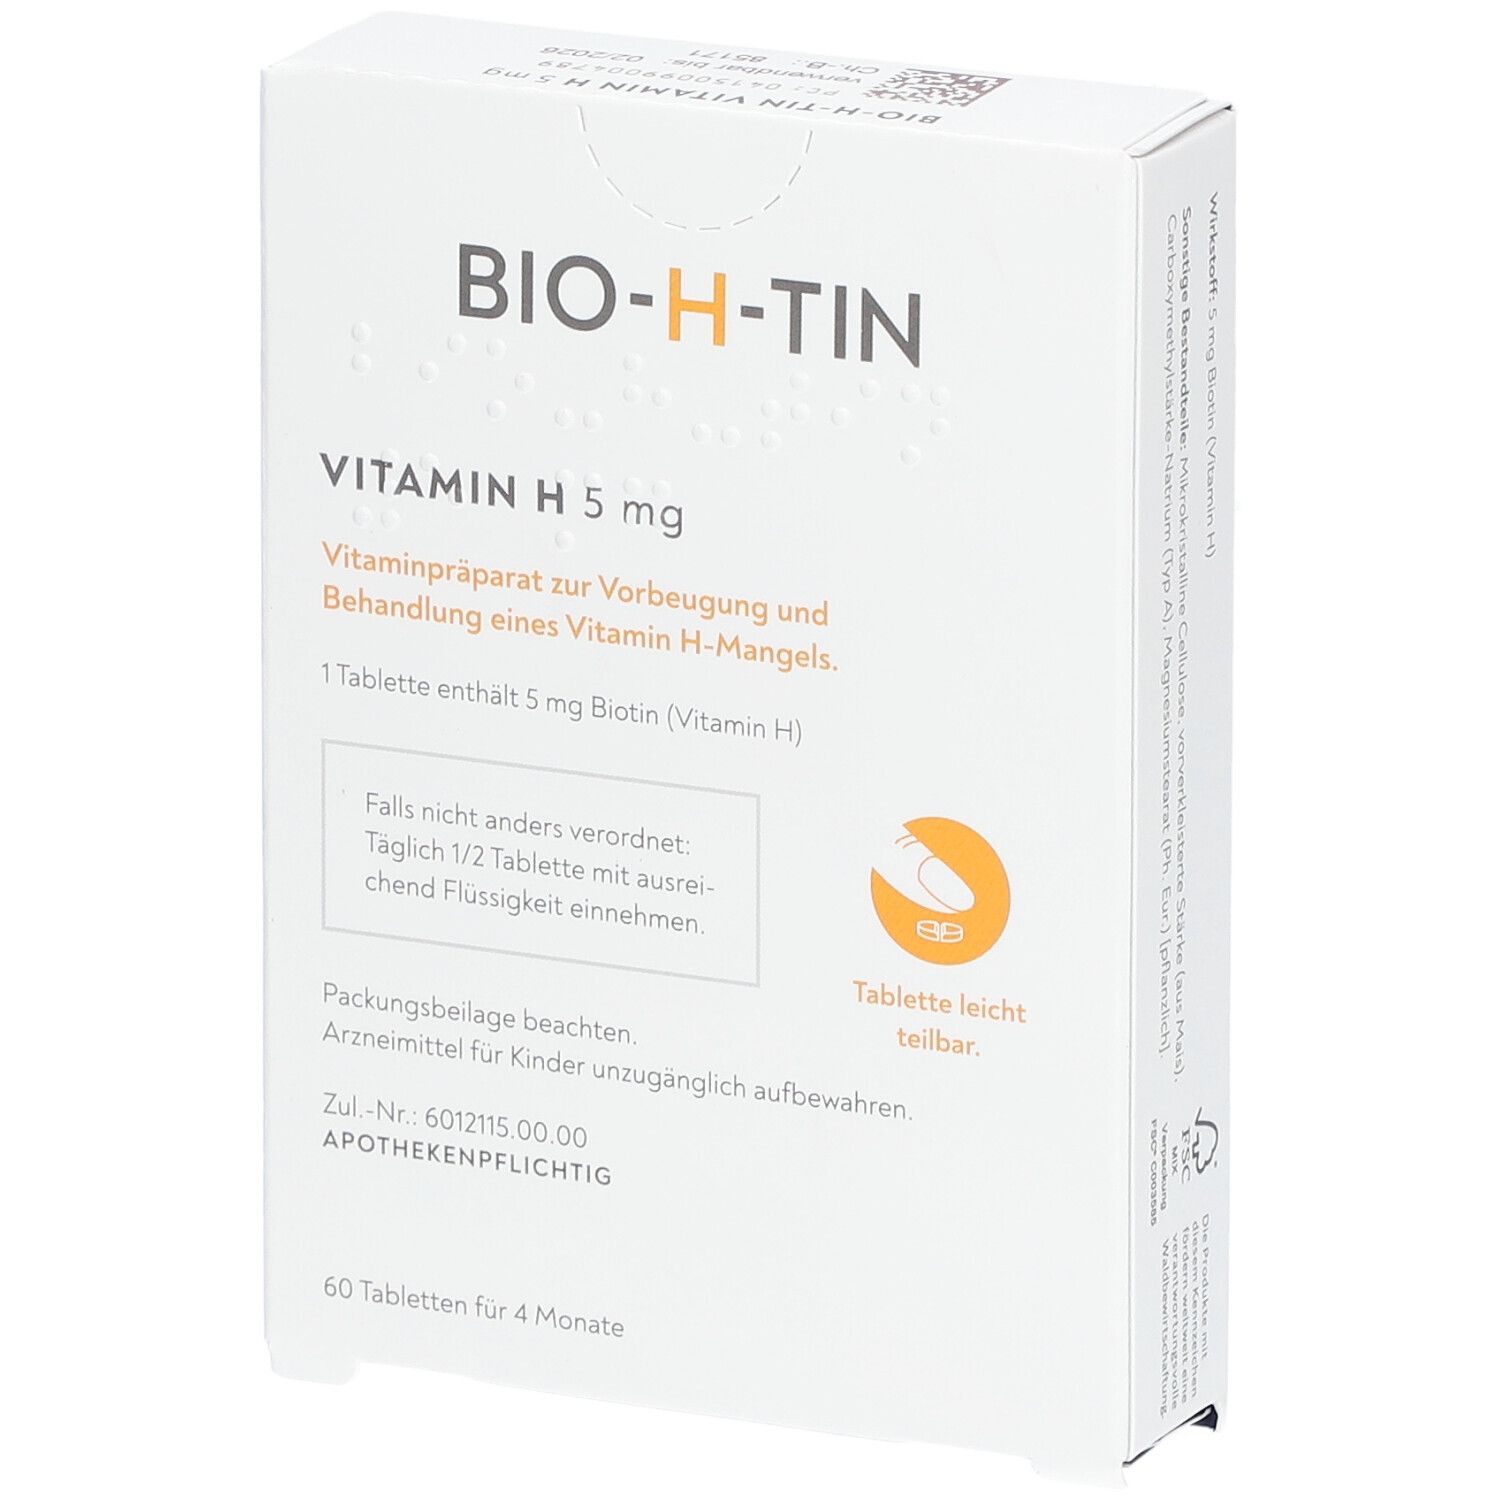 BIO-H-TIN® Vitamin H 5 mg für 4 Monate